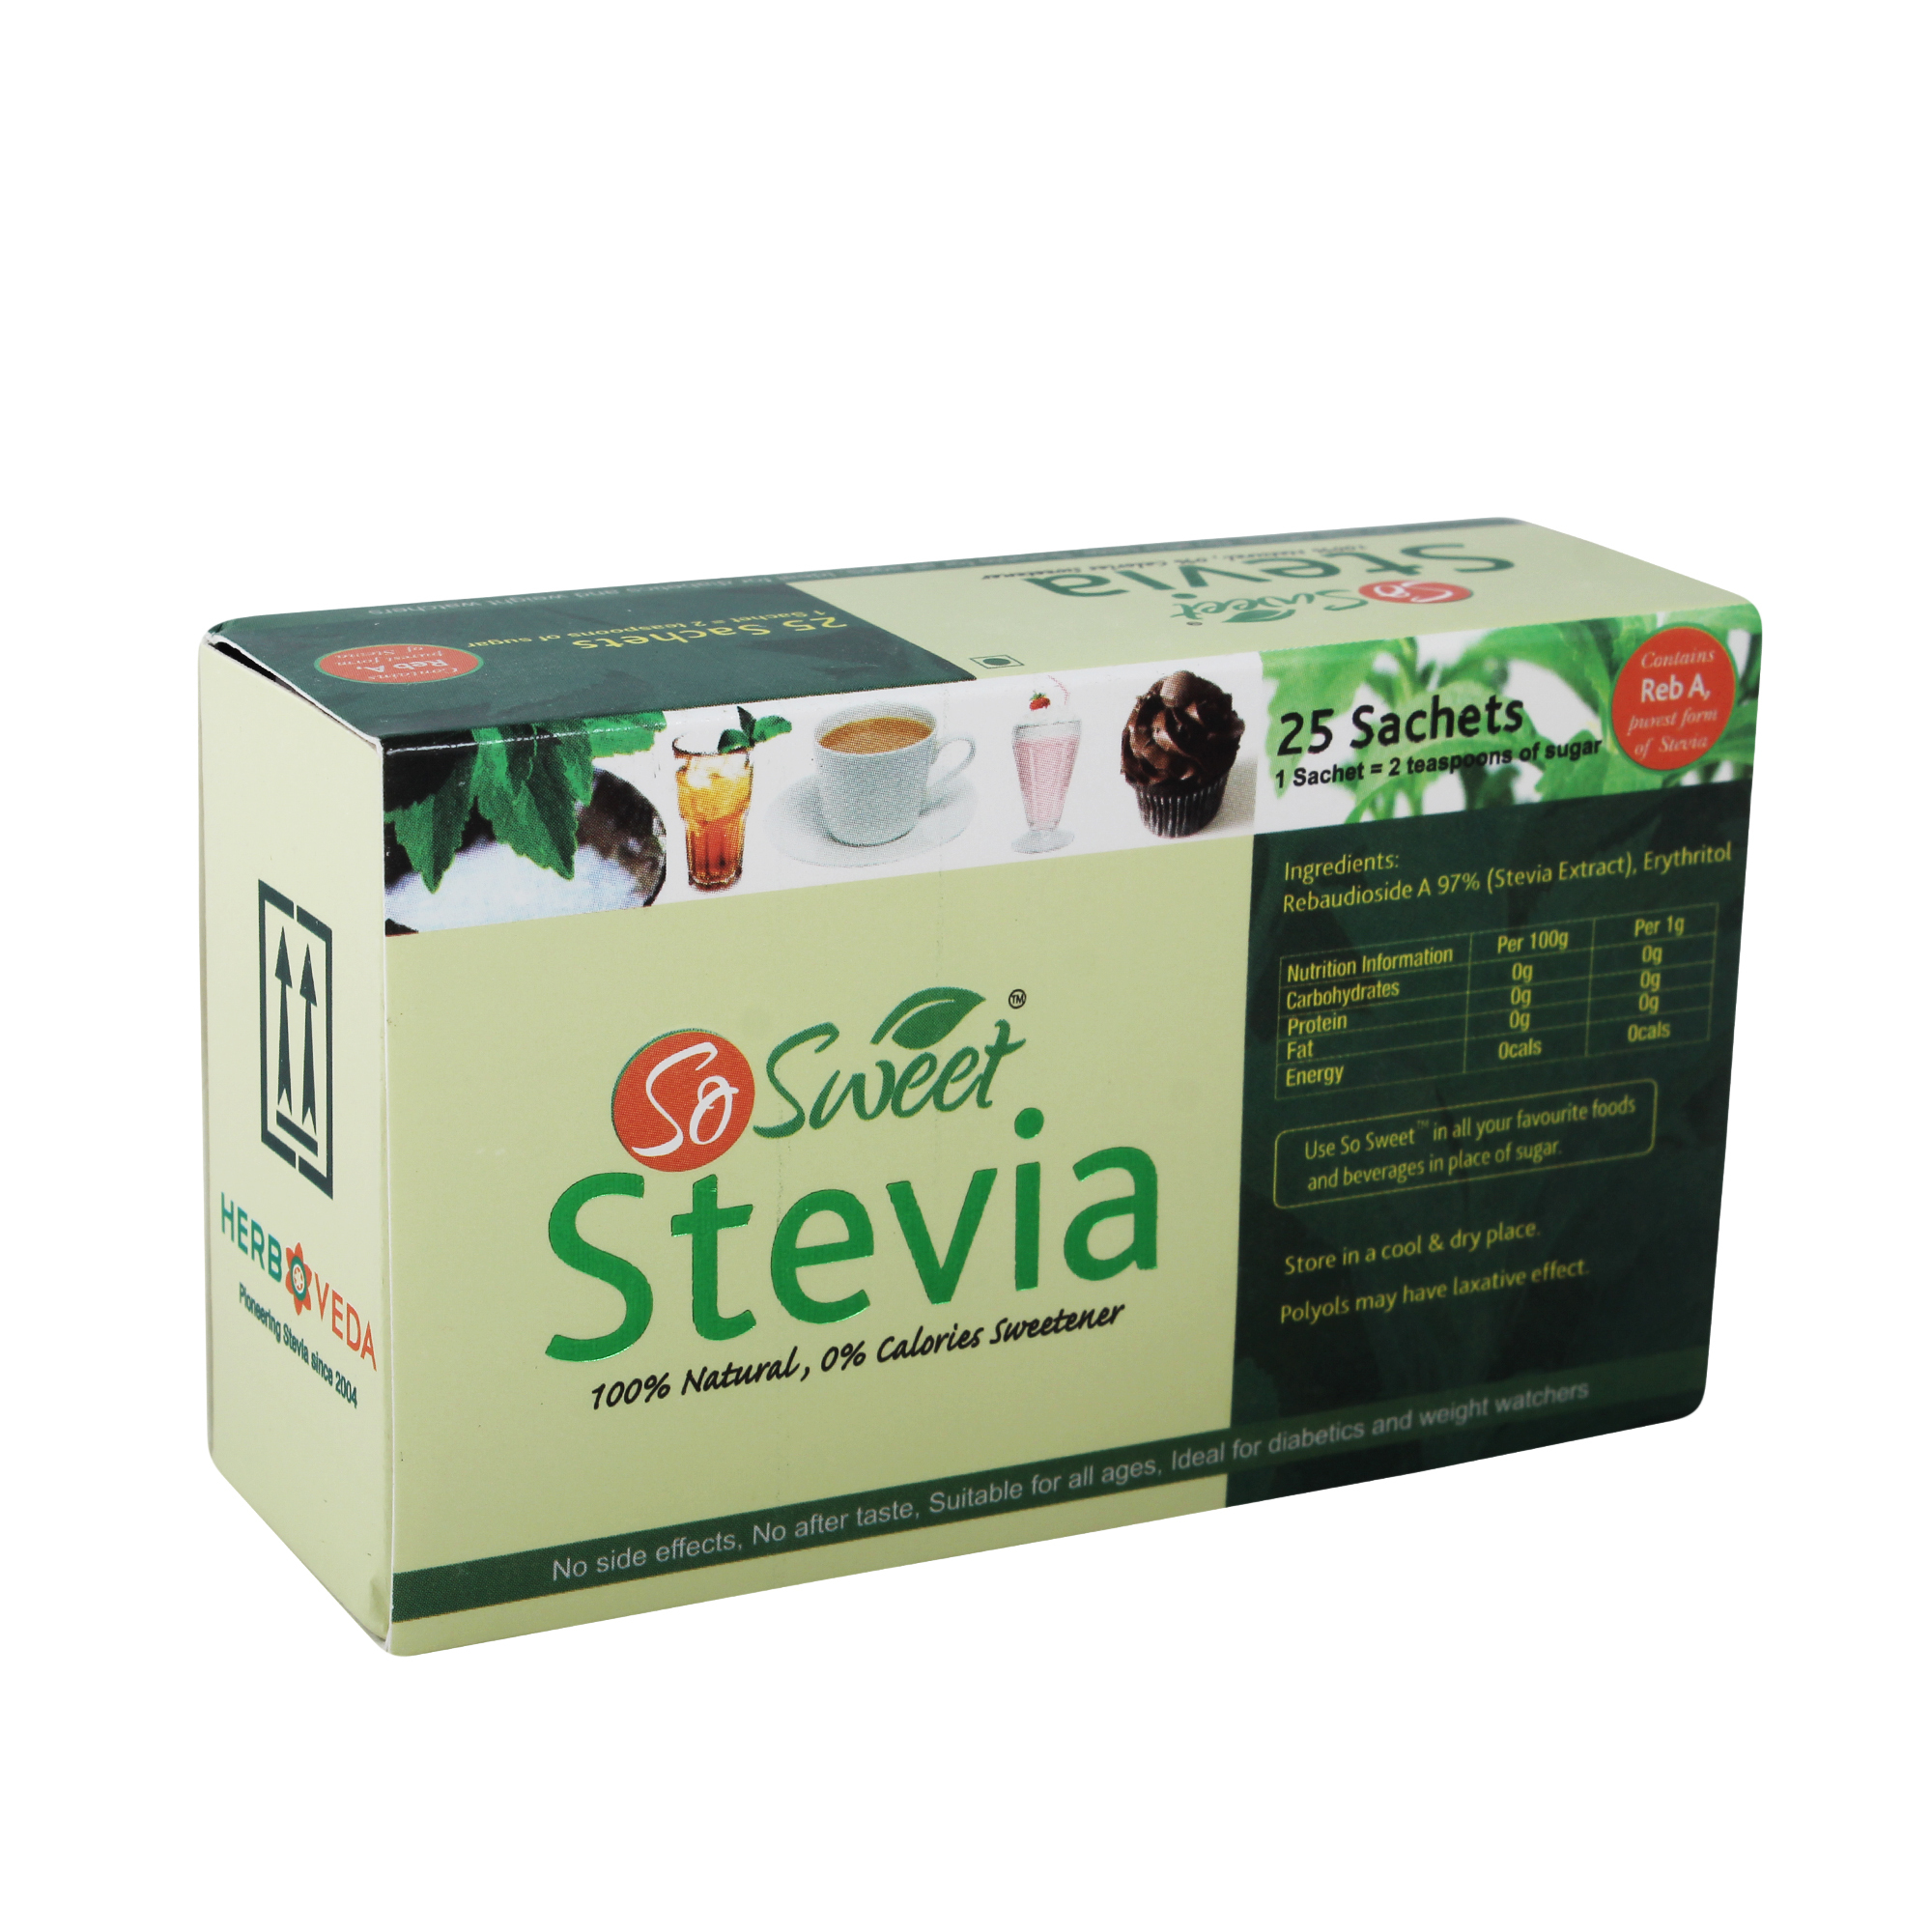 So Sweet Stevia Sachets (25 Sachets in one Box)